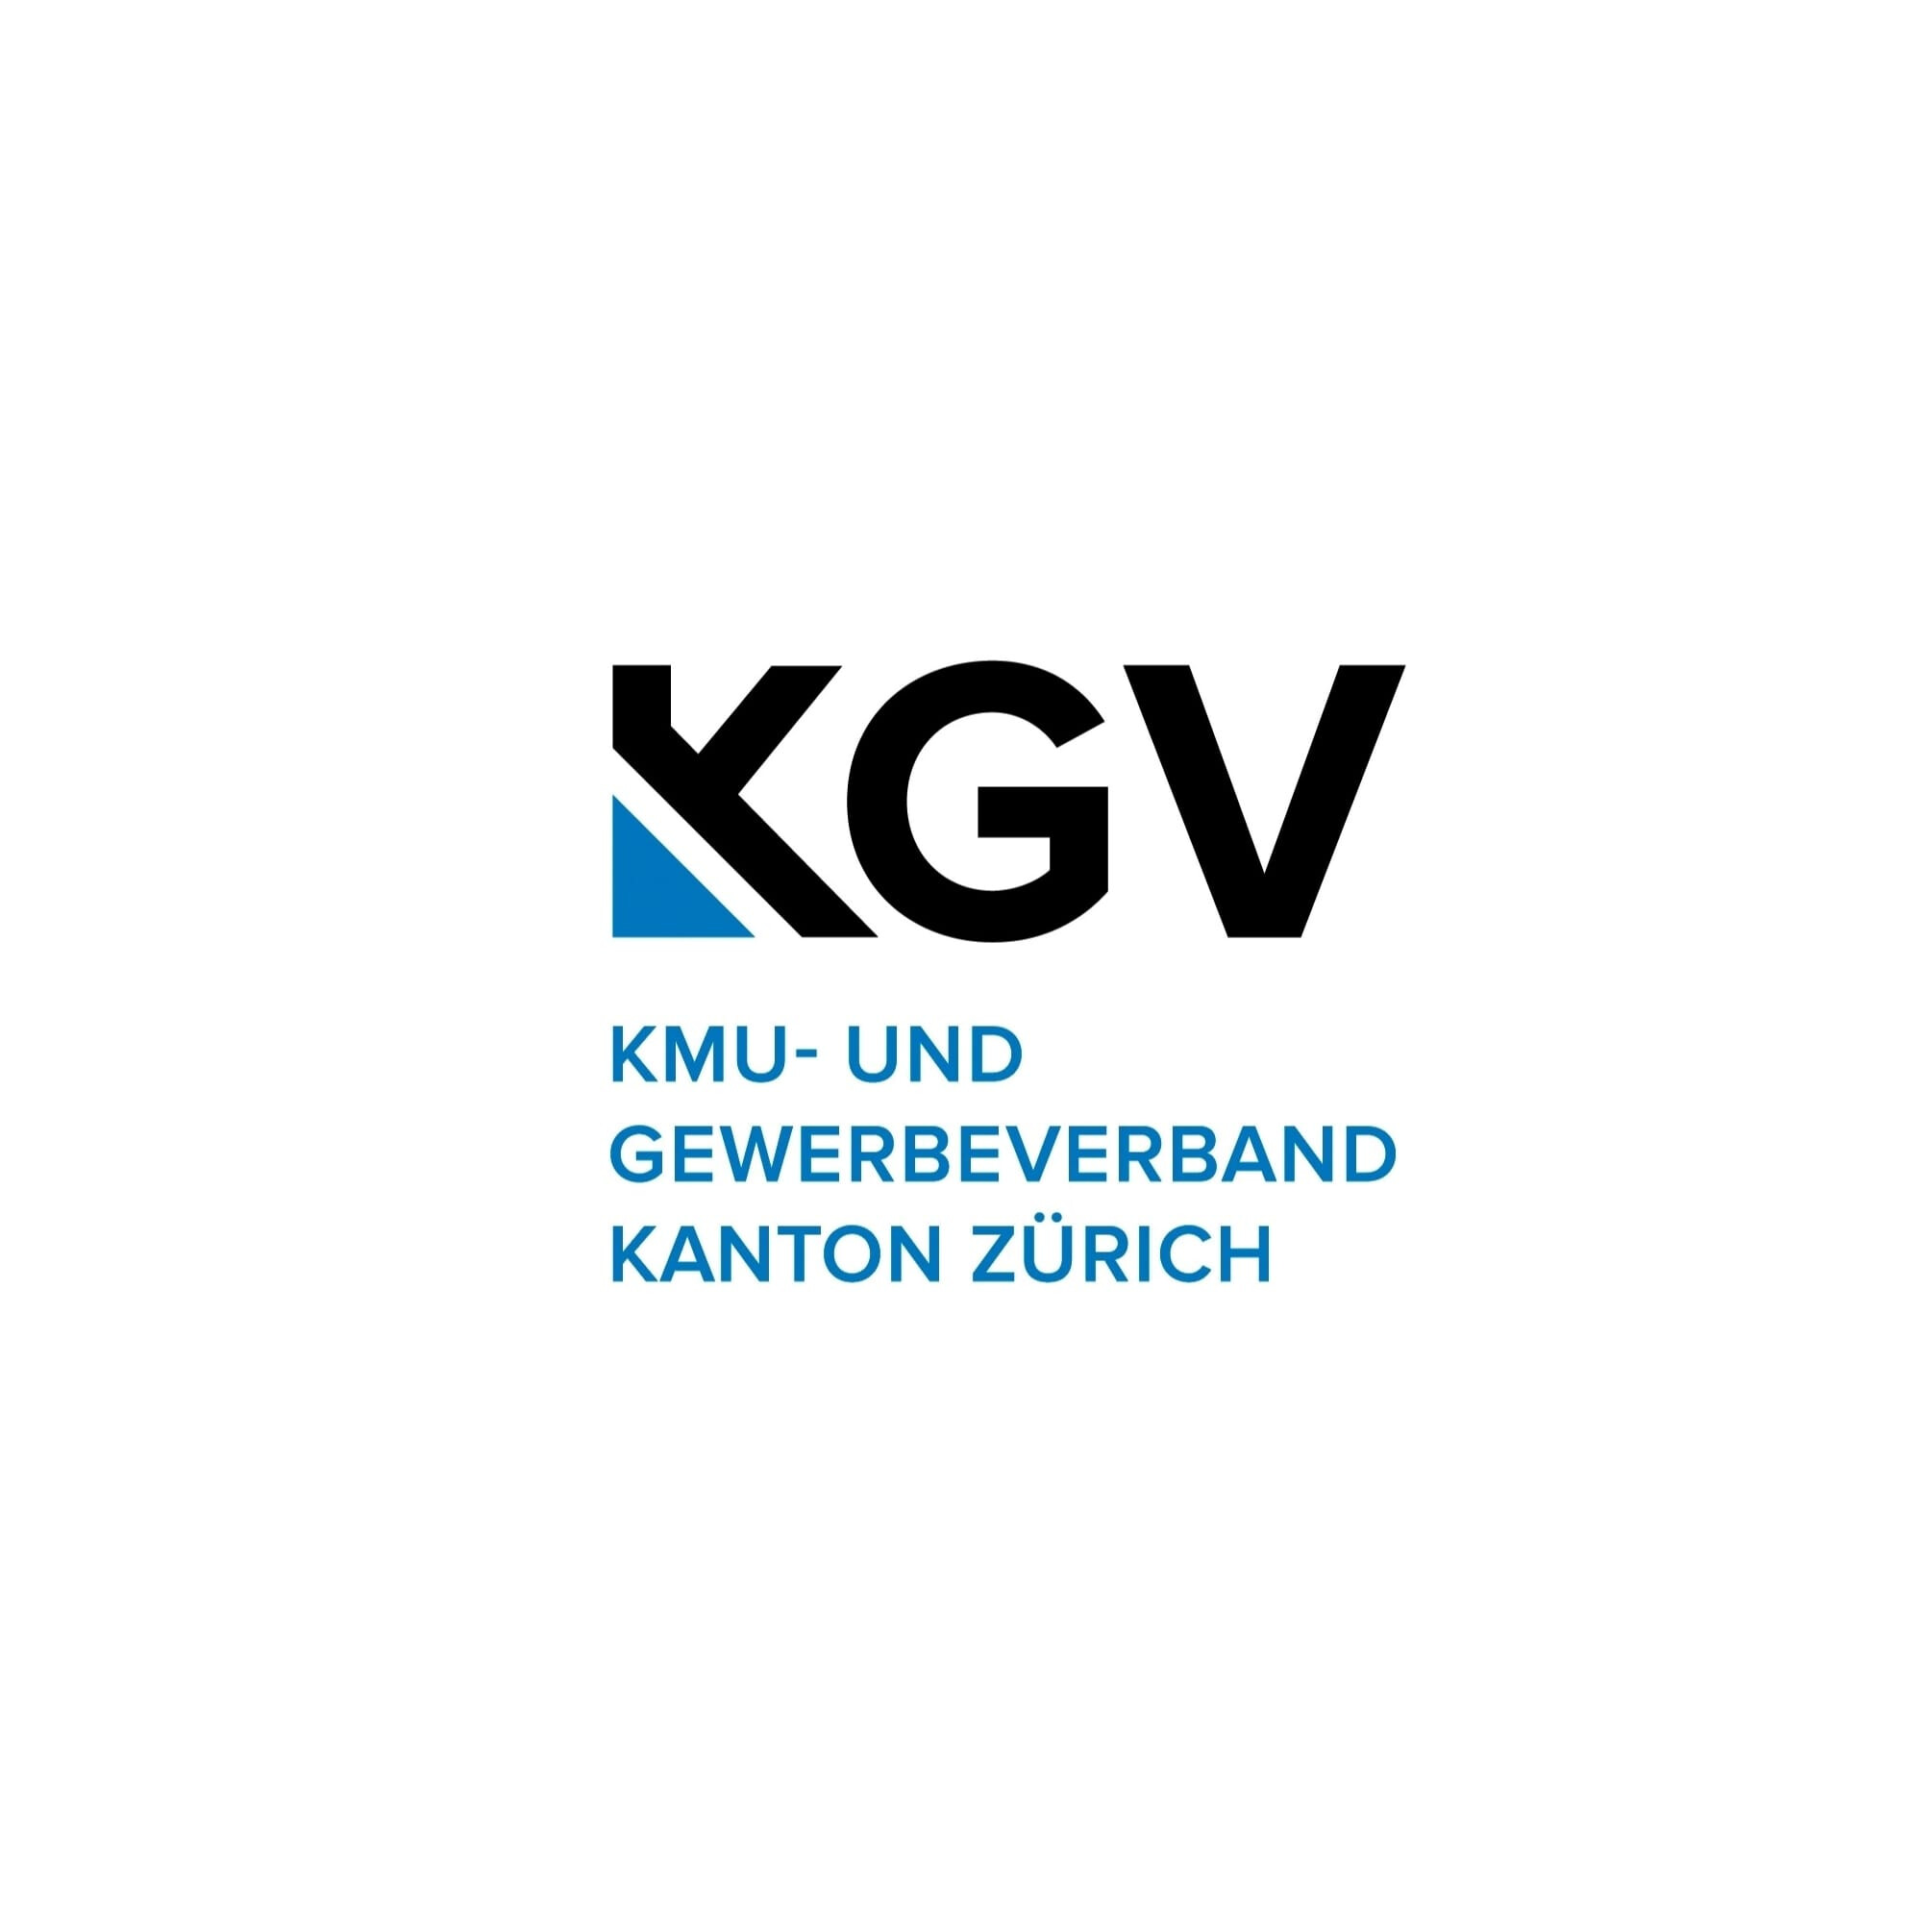 KGV_LOGO_RGB 2.jpg (0.2 MB)